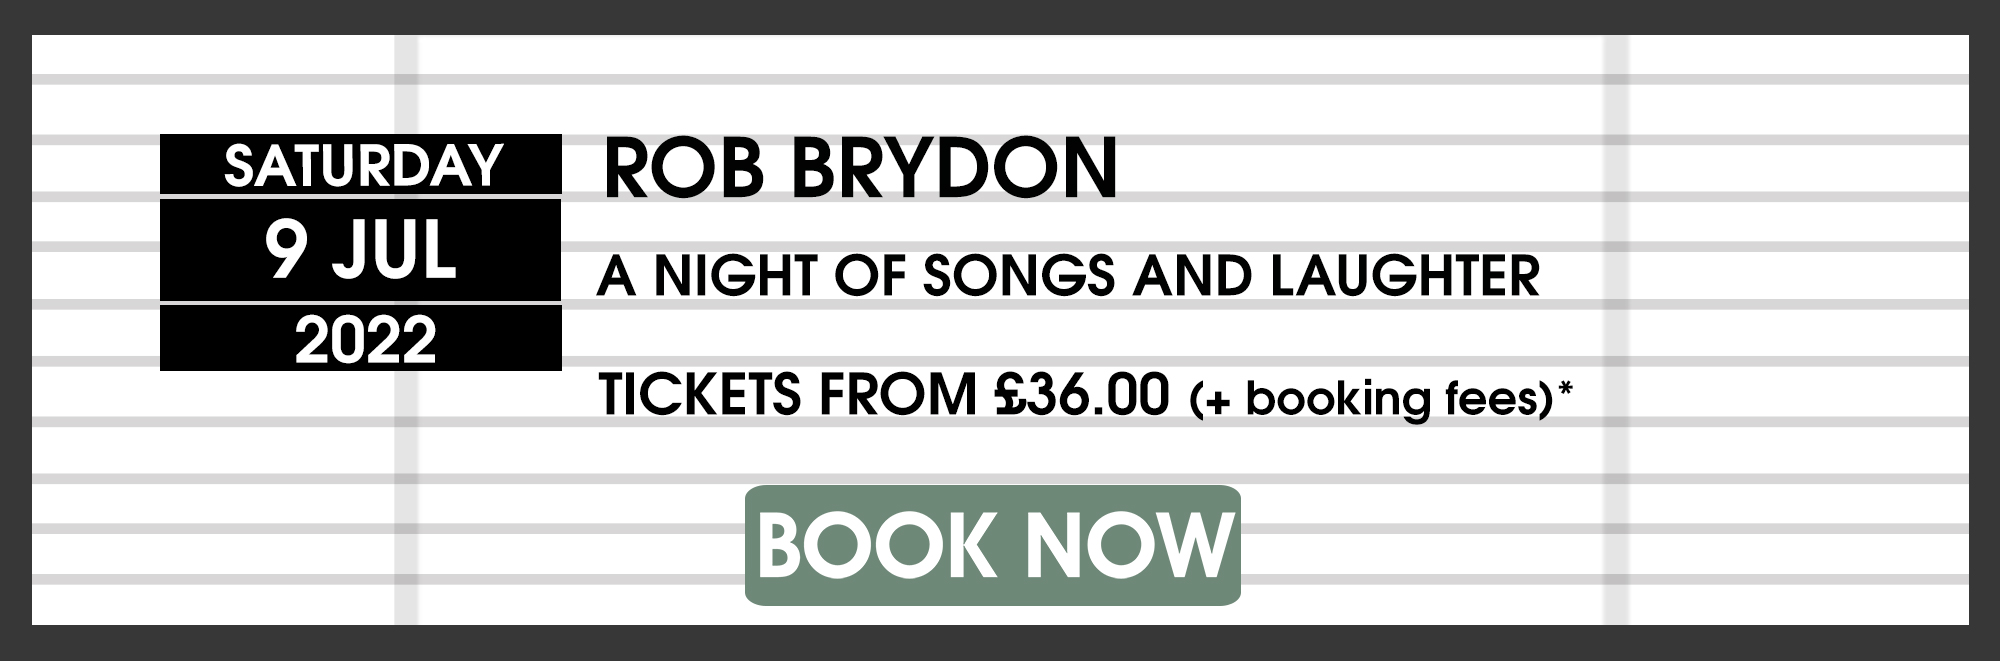 09.07.22 Rob Brydon BOOK NOW